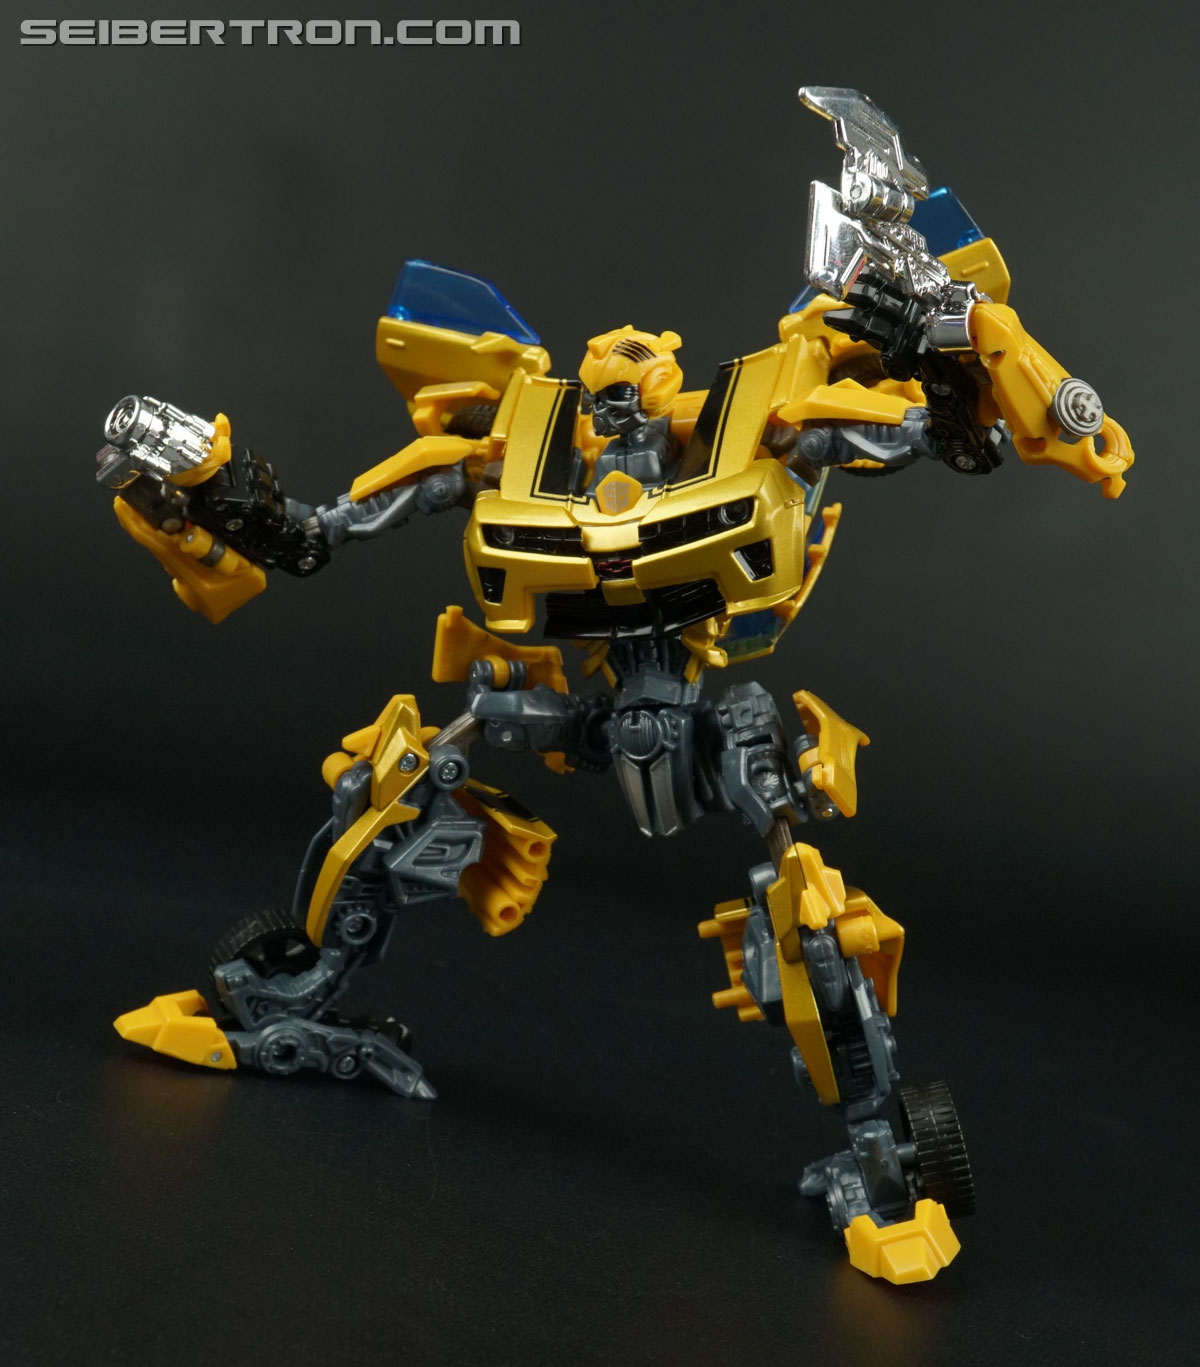 Transformers Takara Tomy: Movie Advanced Battle Blade Bumblebee (Image #79 of 111)